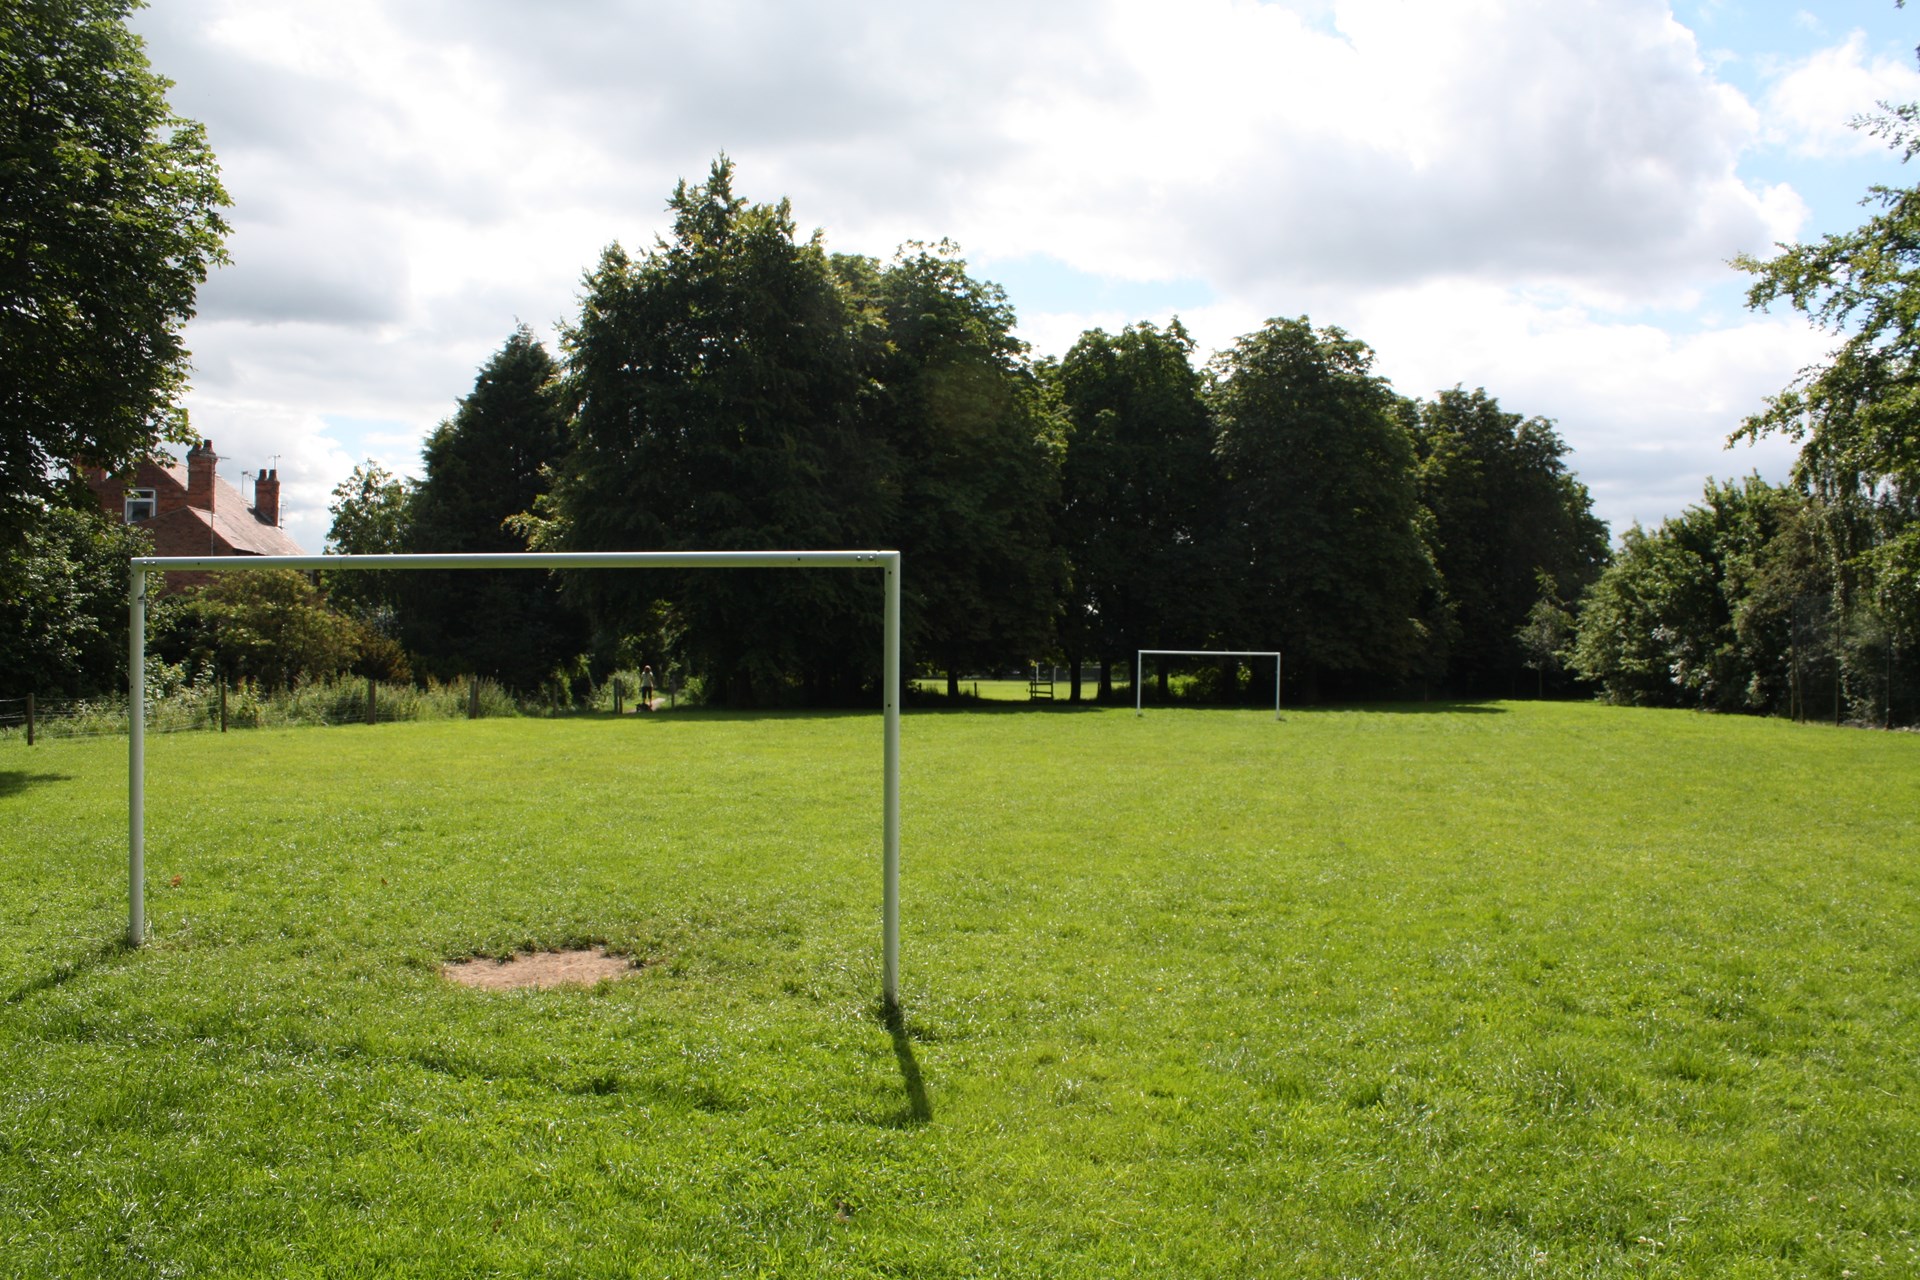 Small football pitch